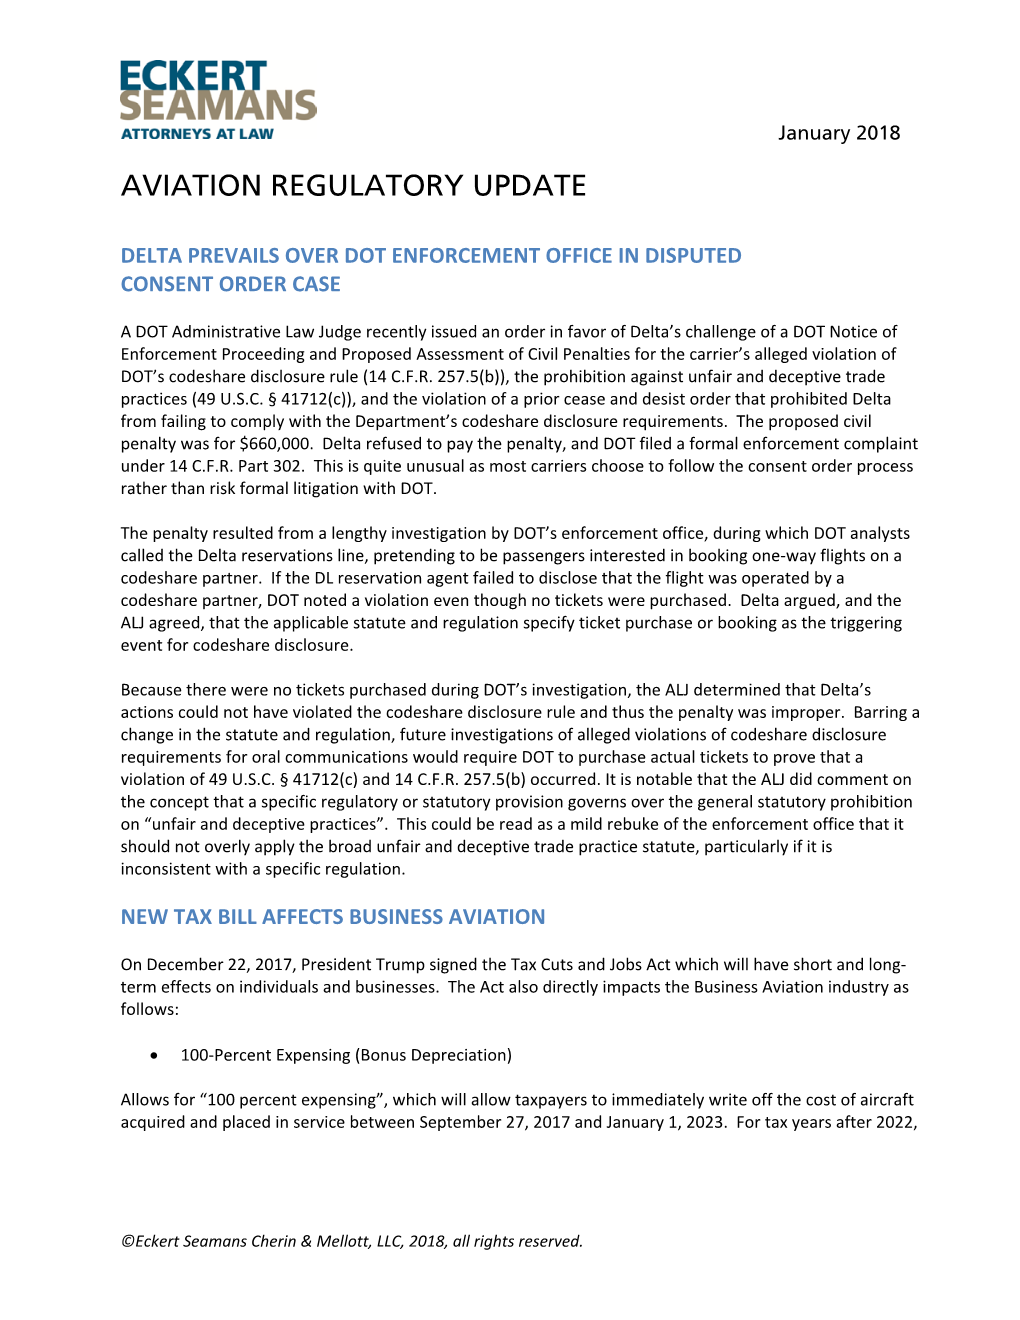 Aviation Regulatory Update